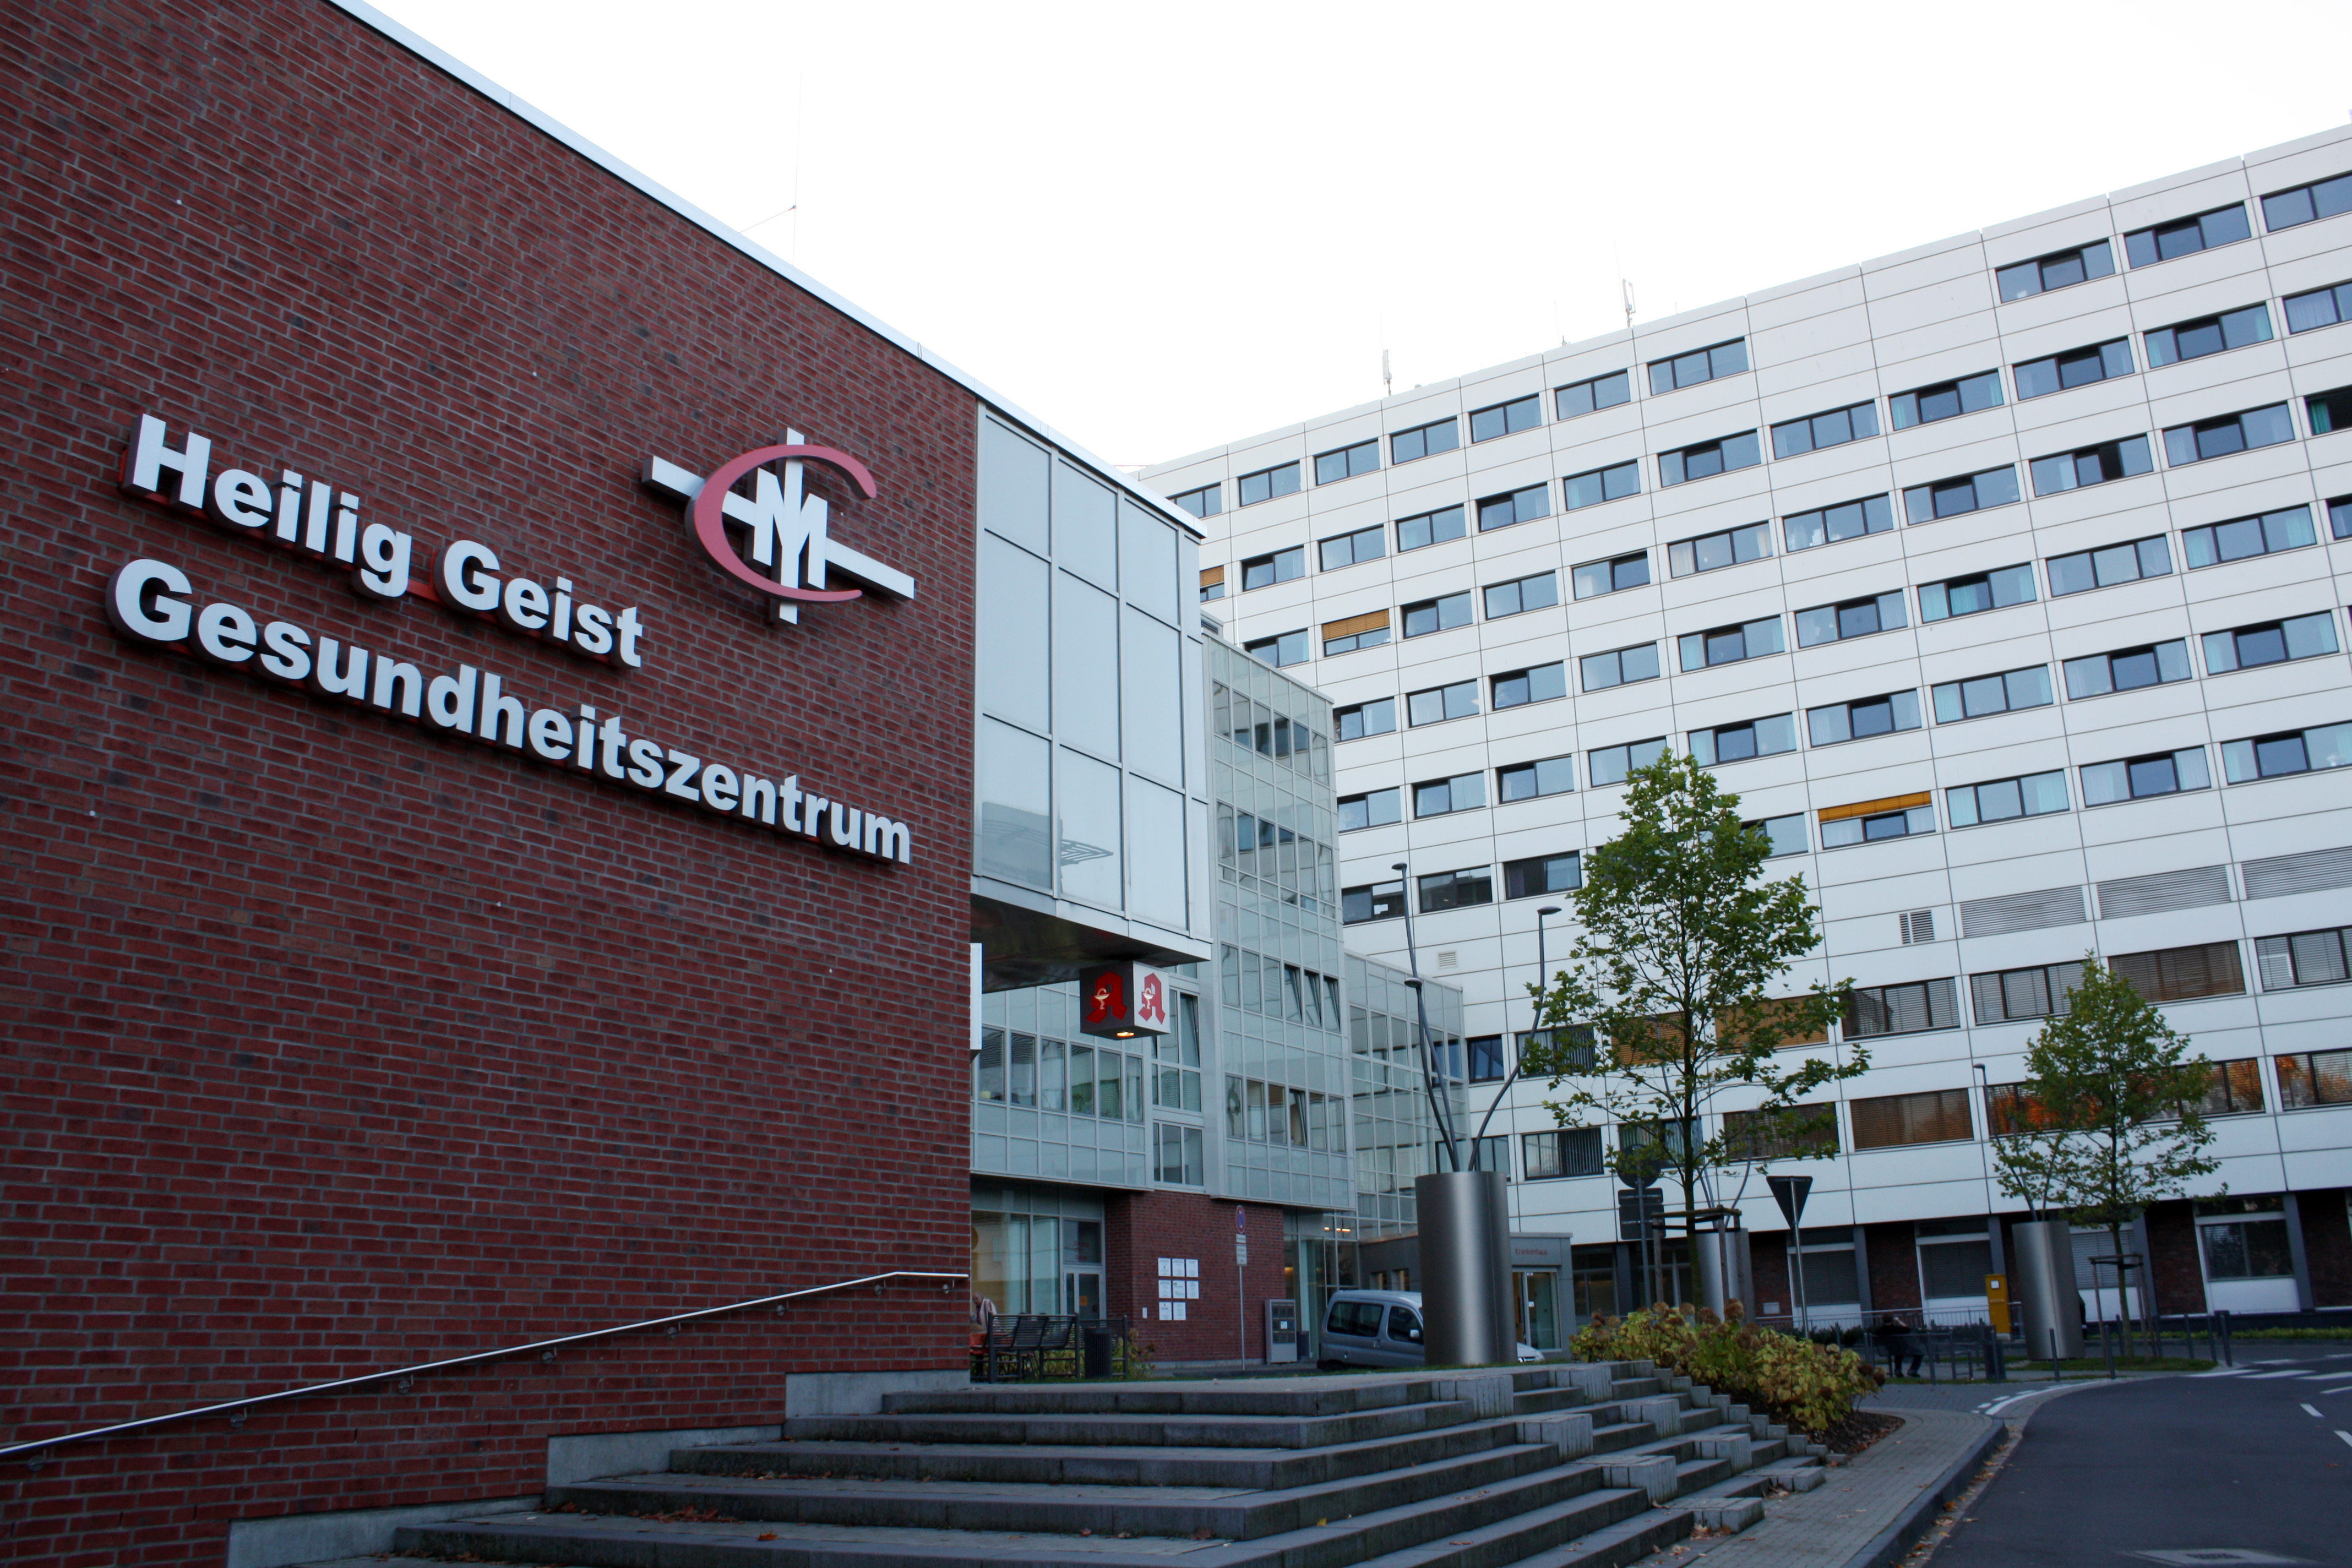 Heiliggeist Krankenhaus Köln